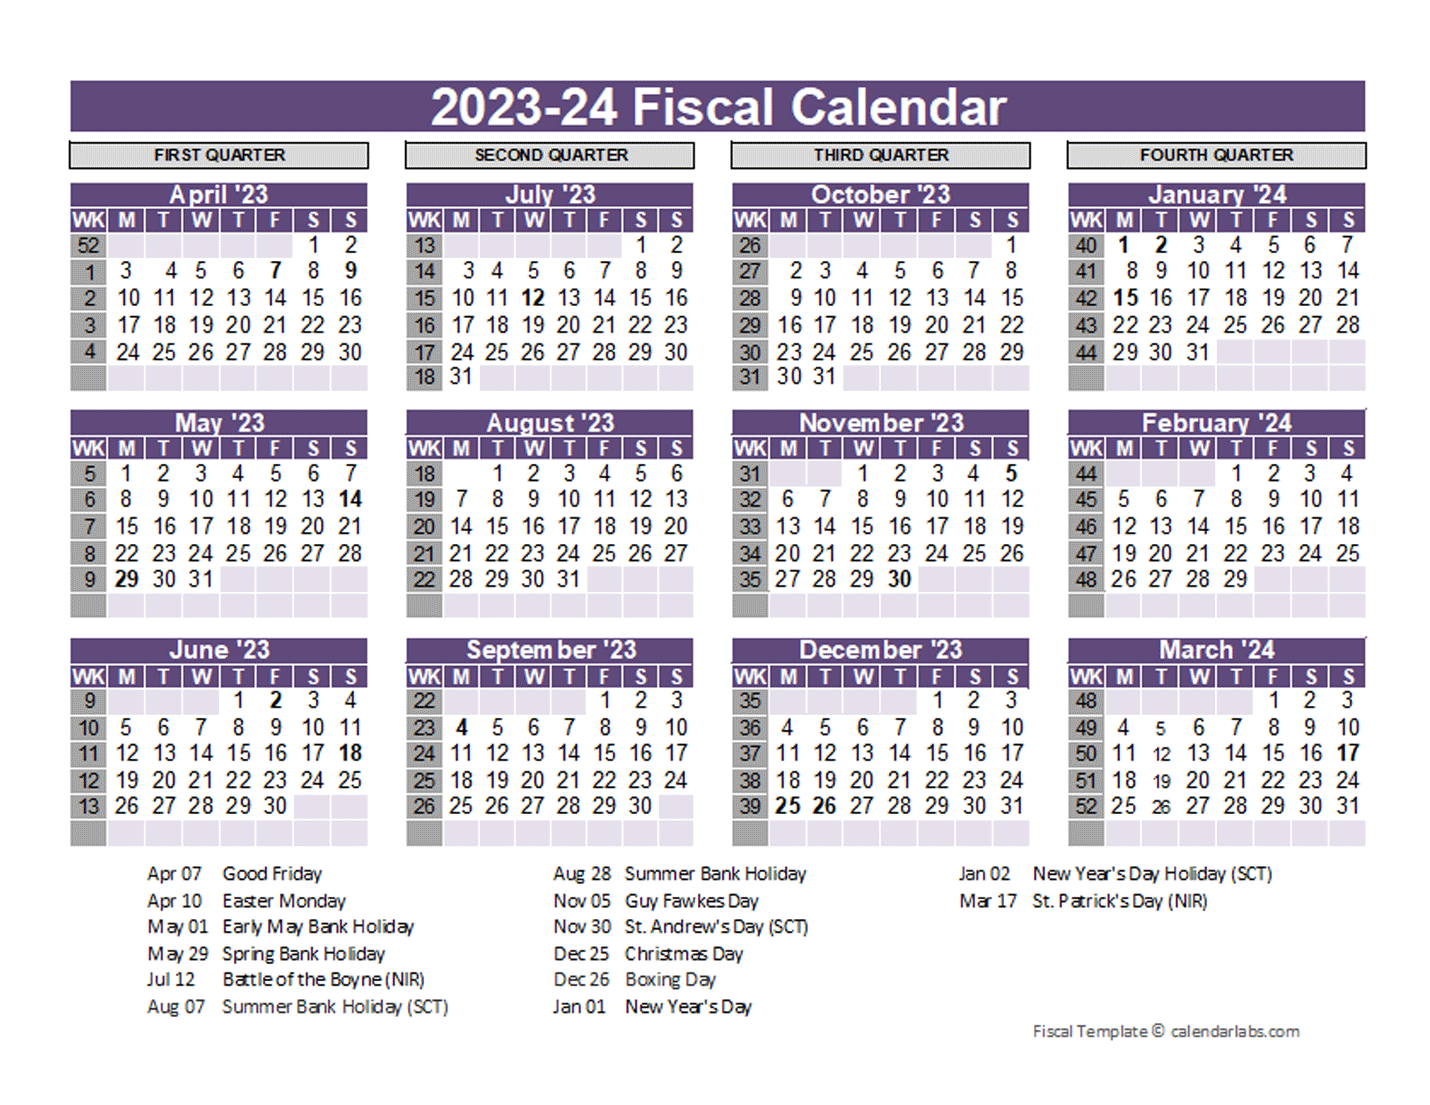 UK Fiscal Calendar Template 2023 2024 Free Printable Templates - Free Printable Calendar 2024 UK Monthly